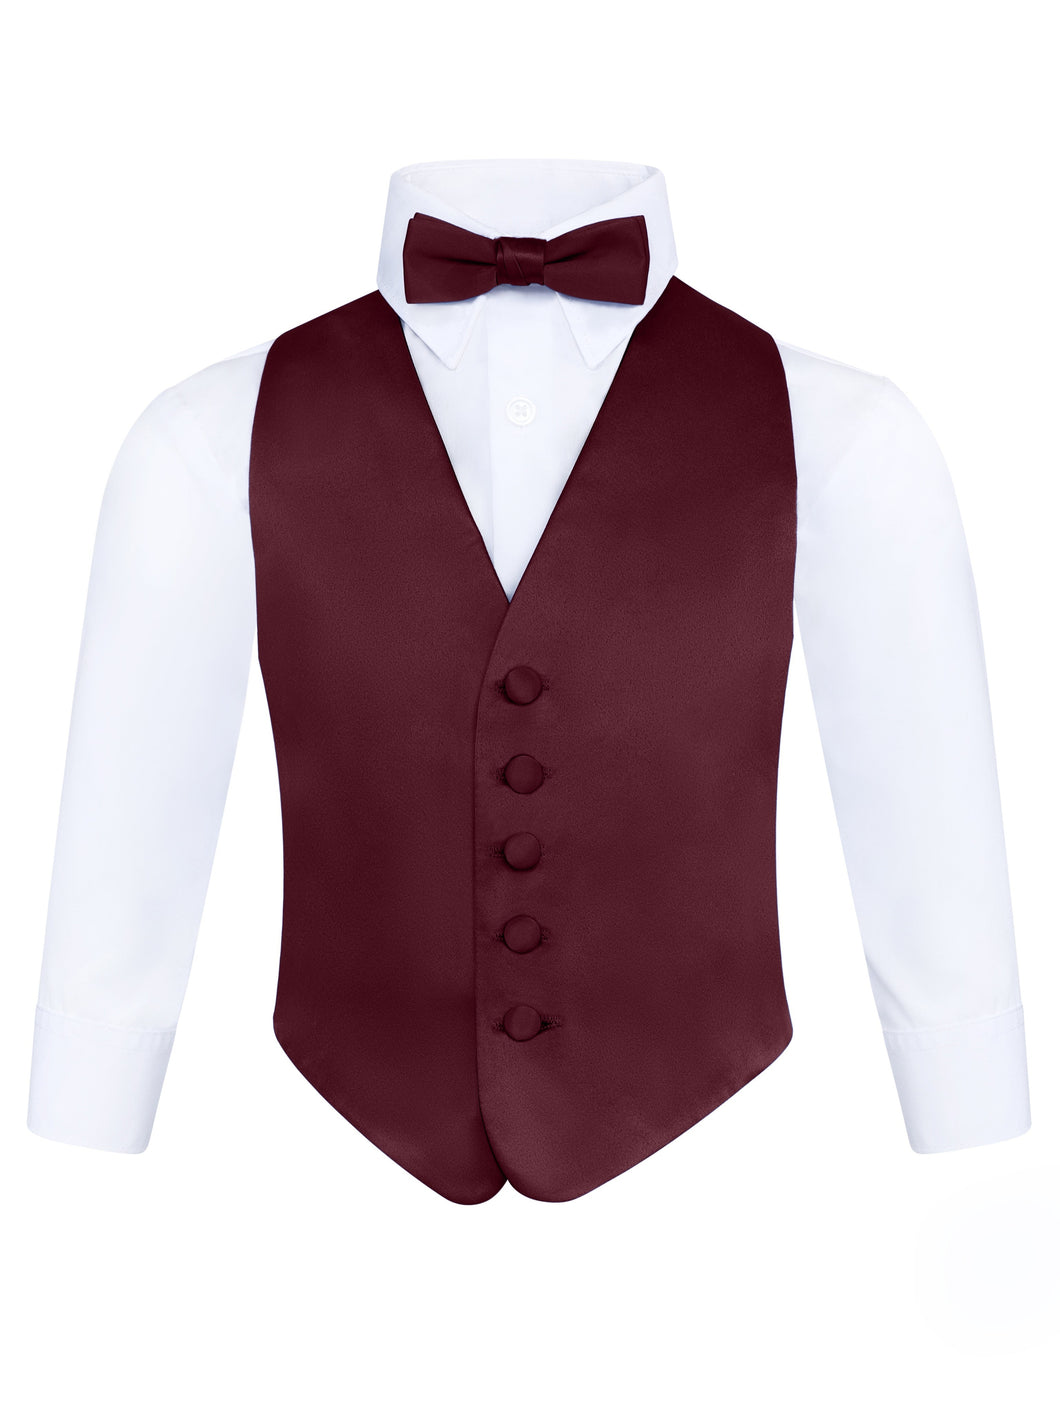 S.H. Churchill & Co. Boy's 3 Piece Burgundy Backless Formal Vest Set - Includes Vest, Bow Tie, Pocket Square for Tuxedo or Suit